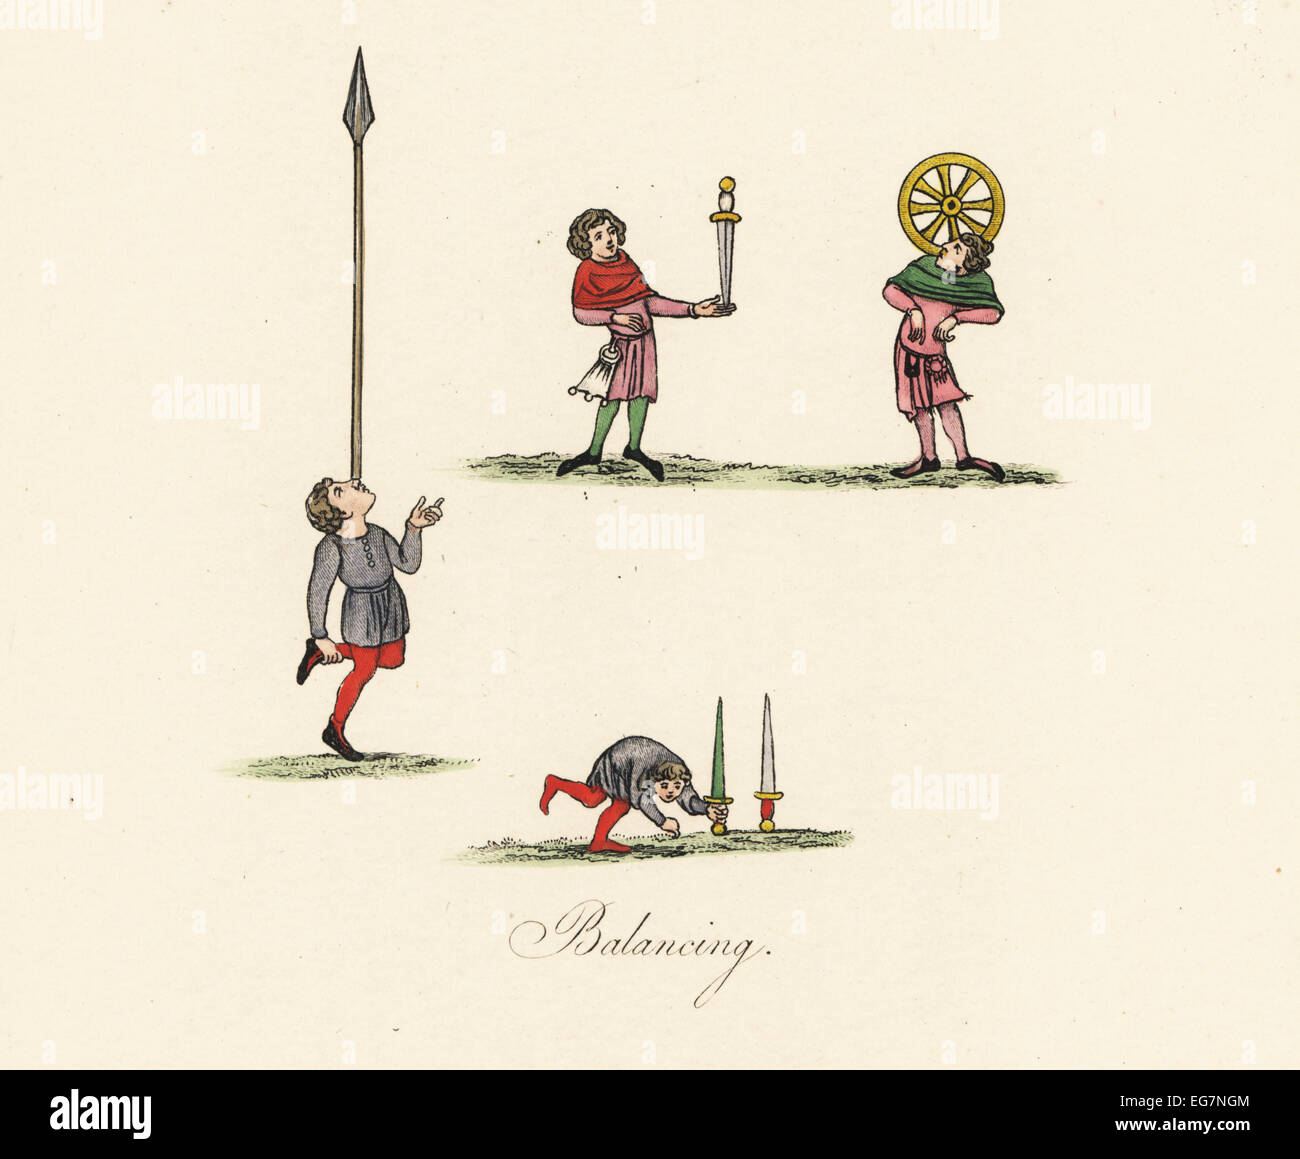 Medieval balancing acts and jugglers. Stock Photo